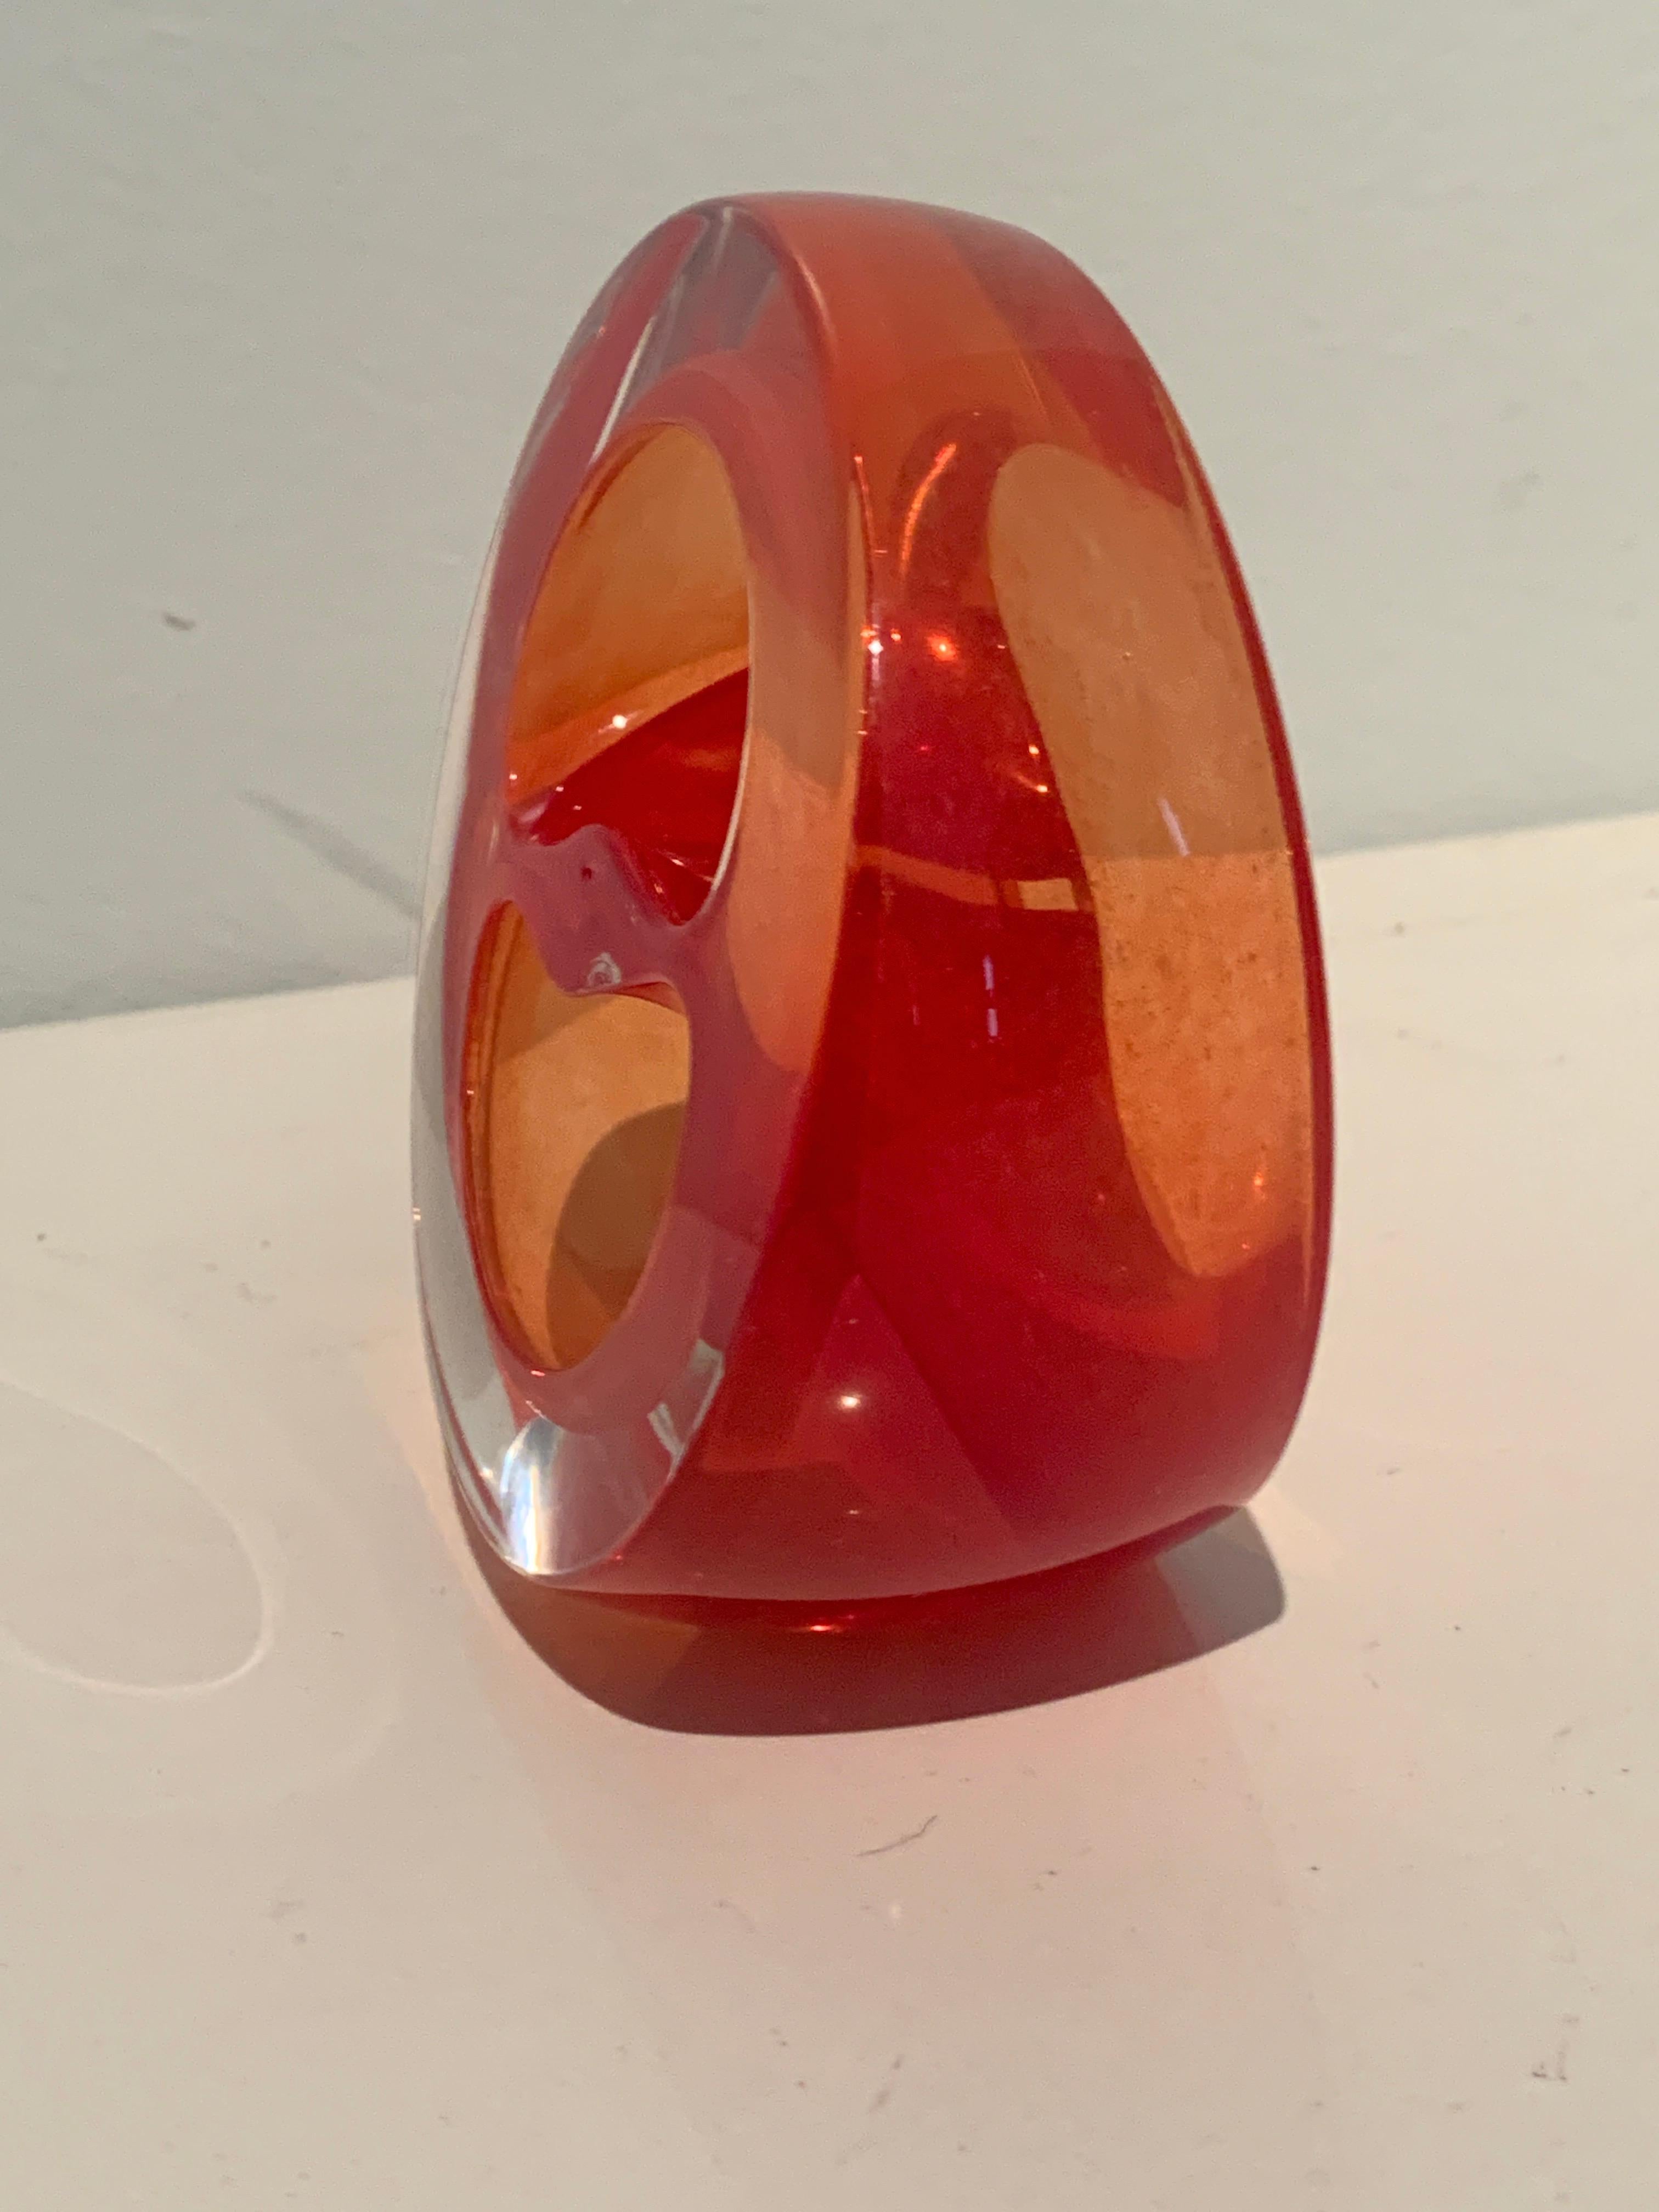 red glass sculpture